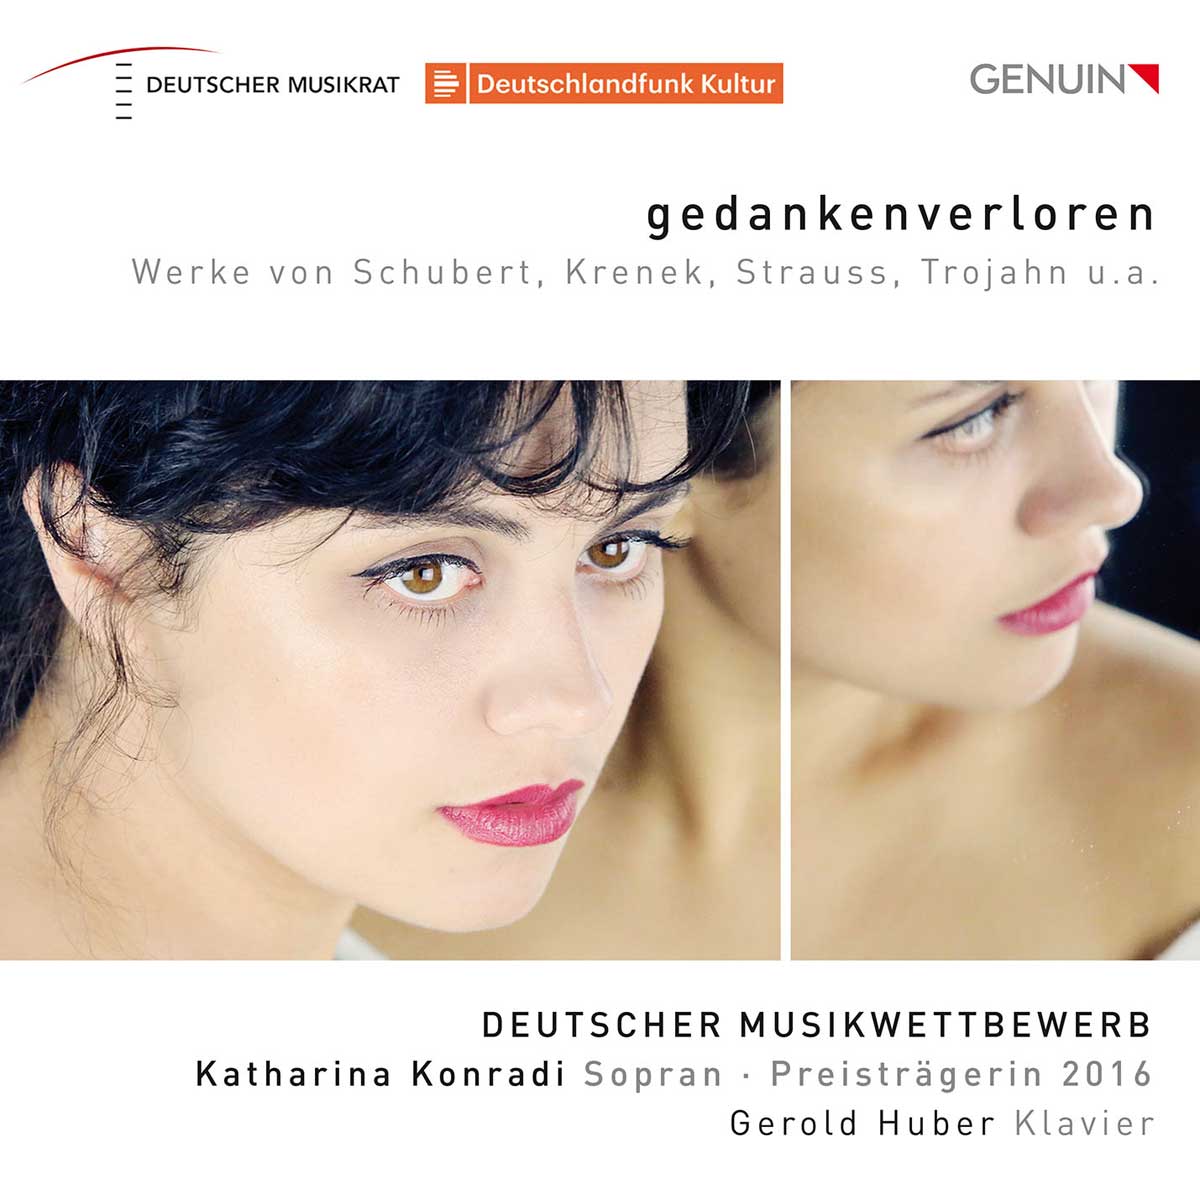 CD album cover 'gedankenverloren' (GEN 18490) with Katharina Konradi, Gerold Huber, Andreas Lipp